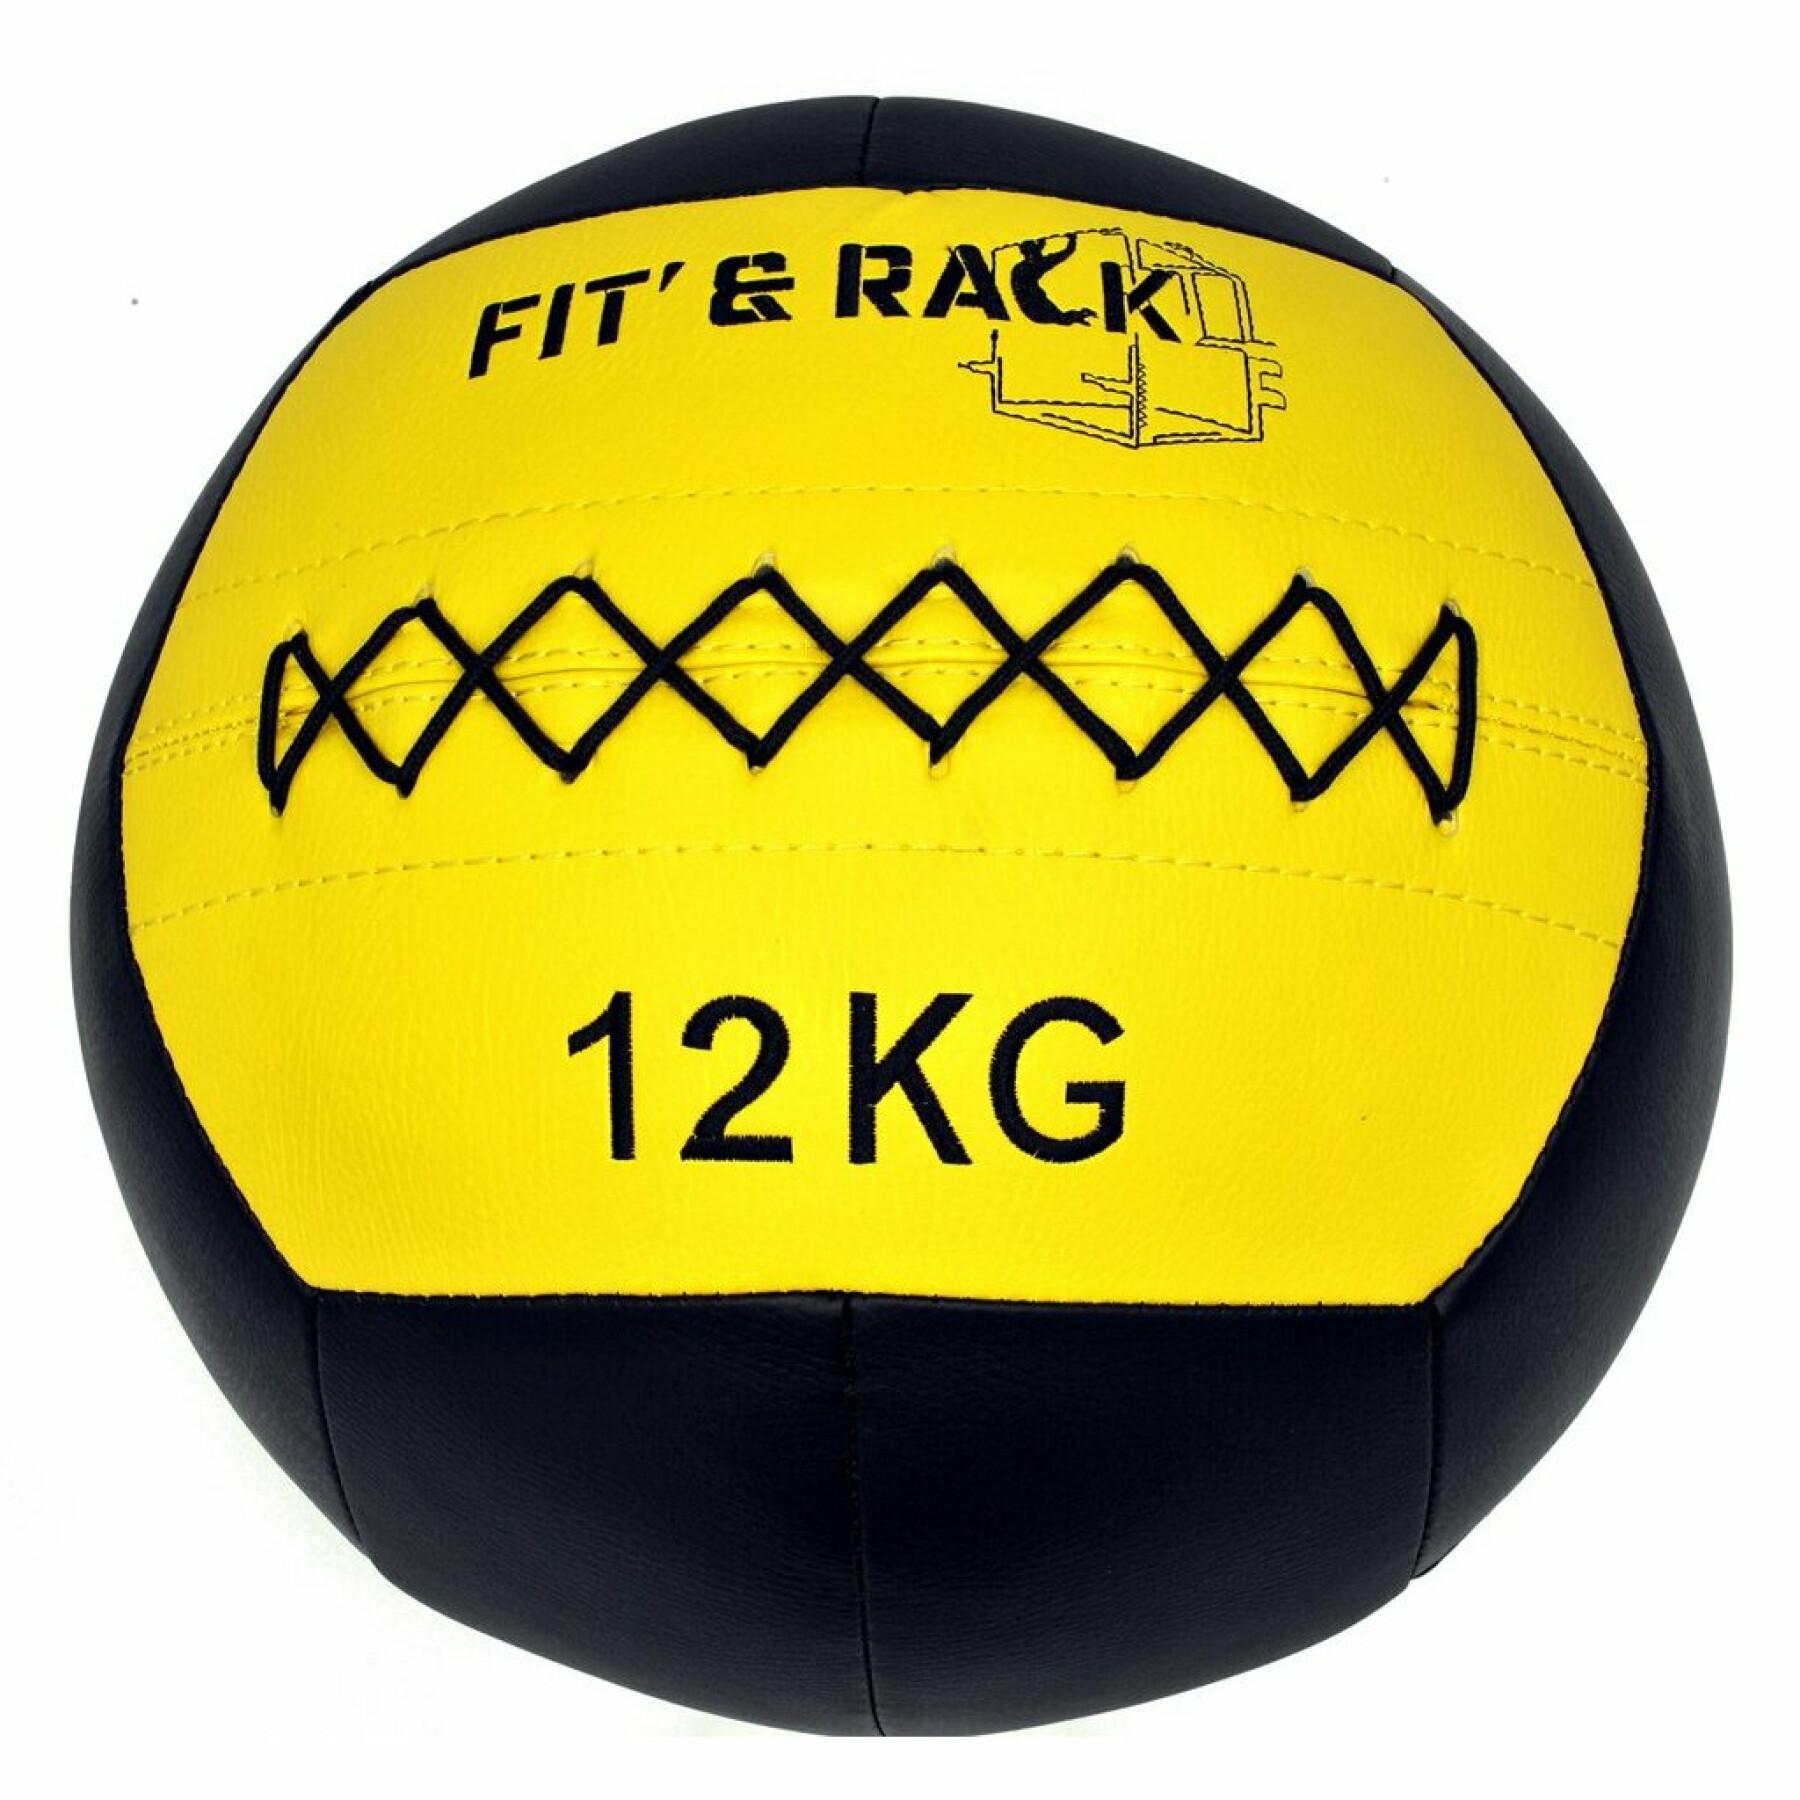 Zawody wall ball Fit & Rack 12 Kg